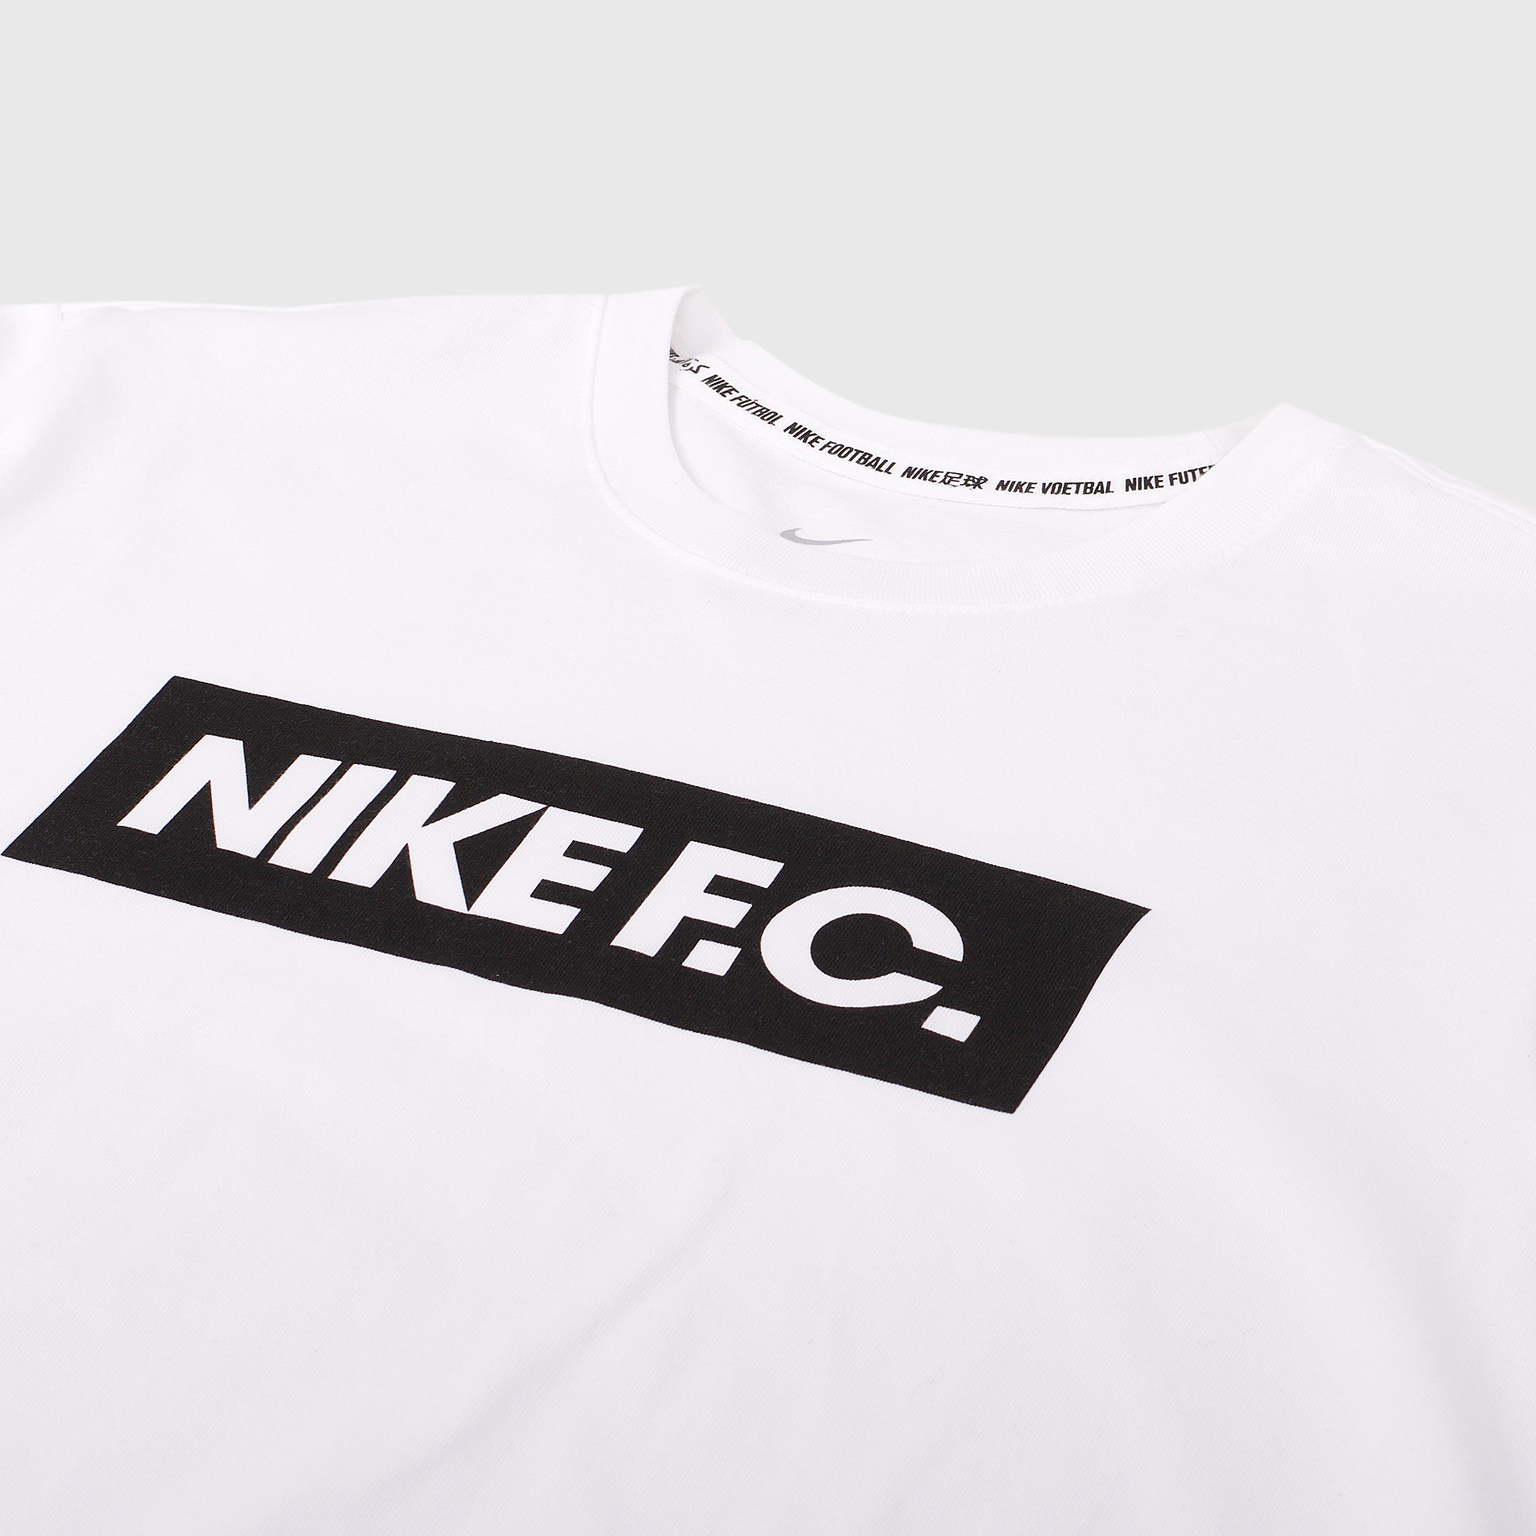 Футболка хлопковая Nike F.C.Tee Essentials CT8429-100